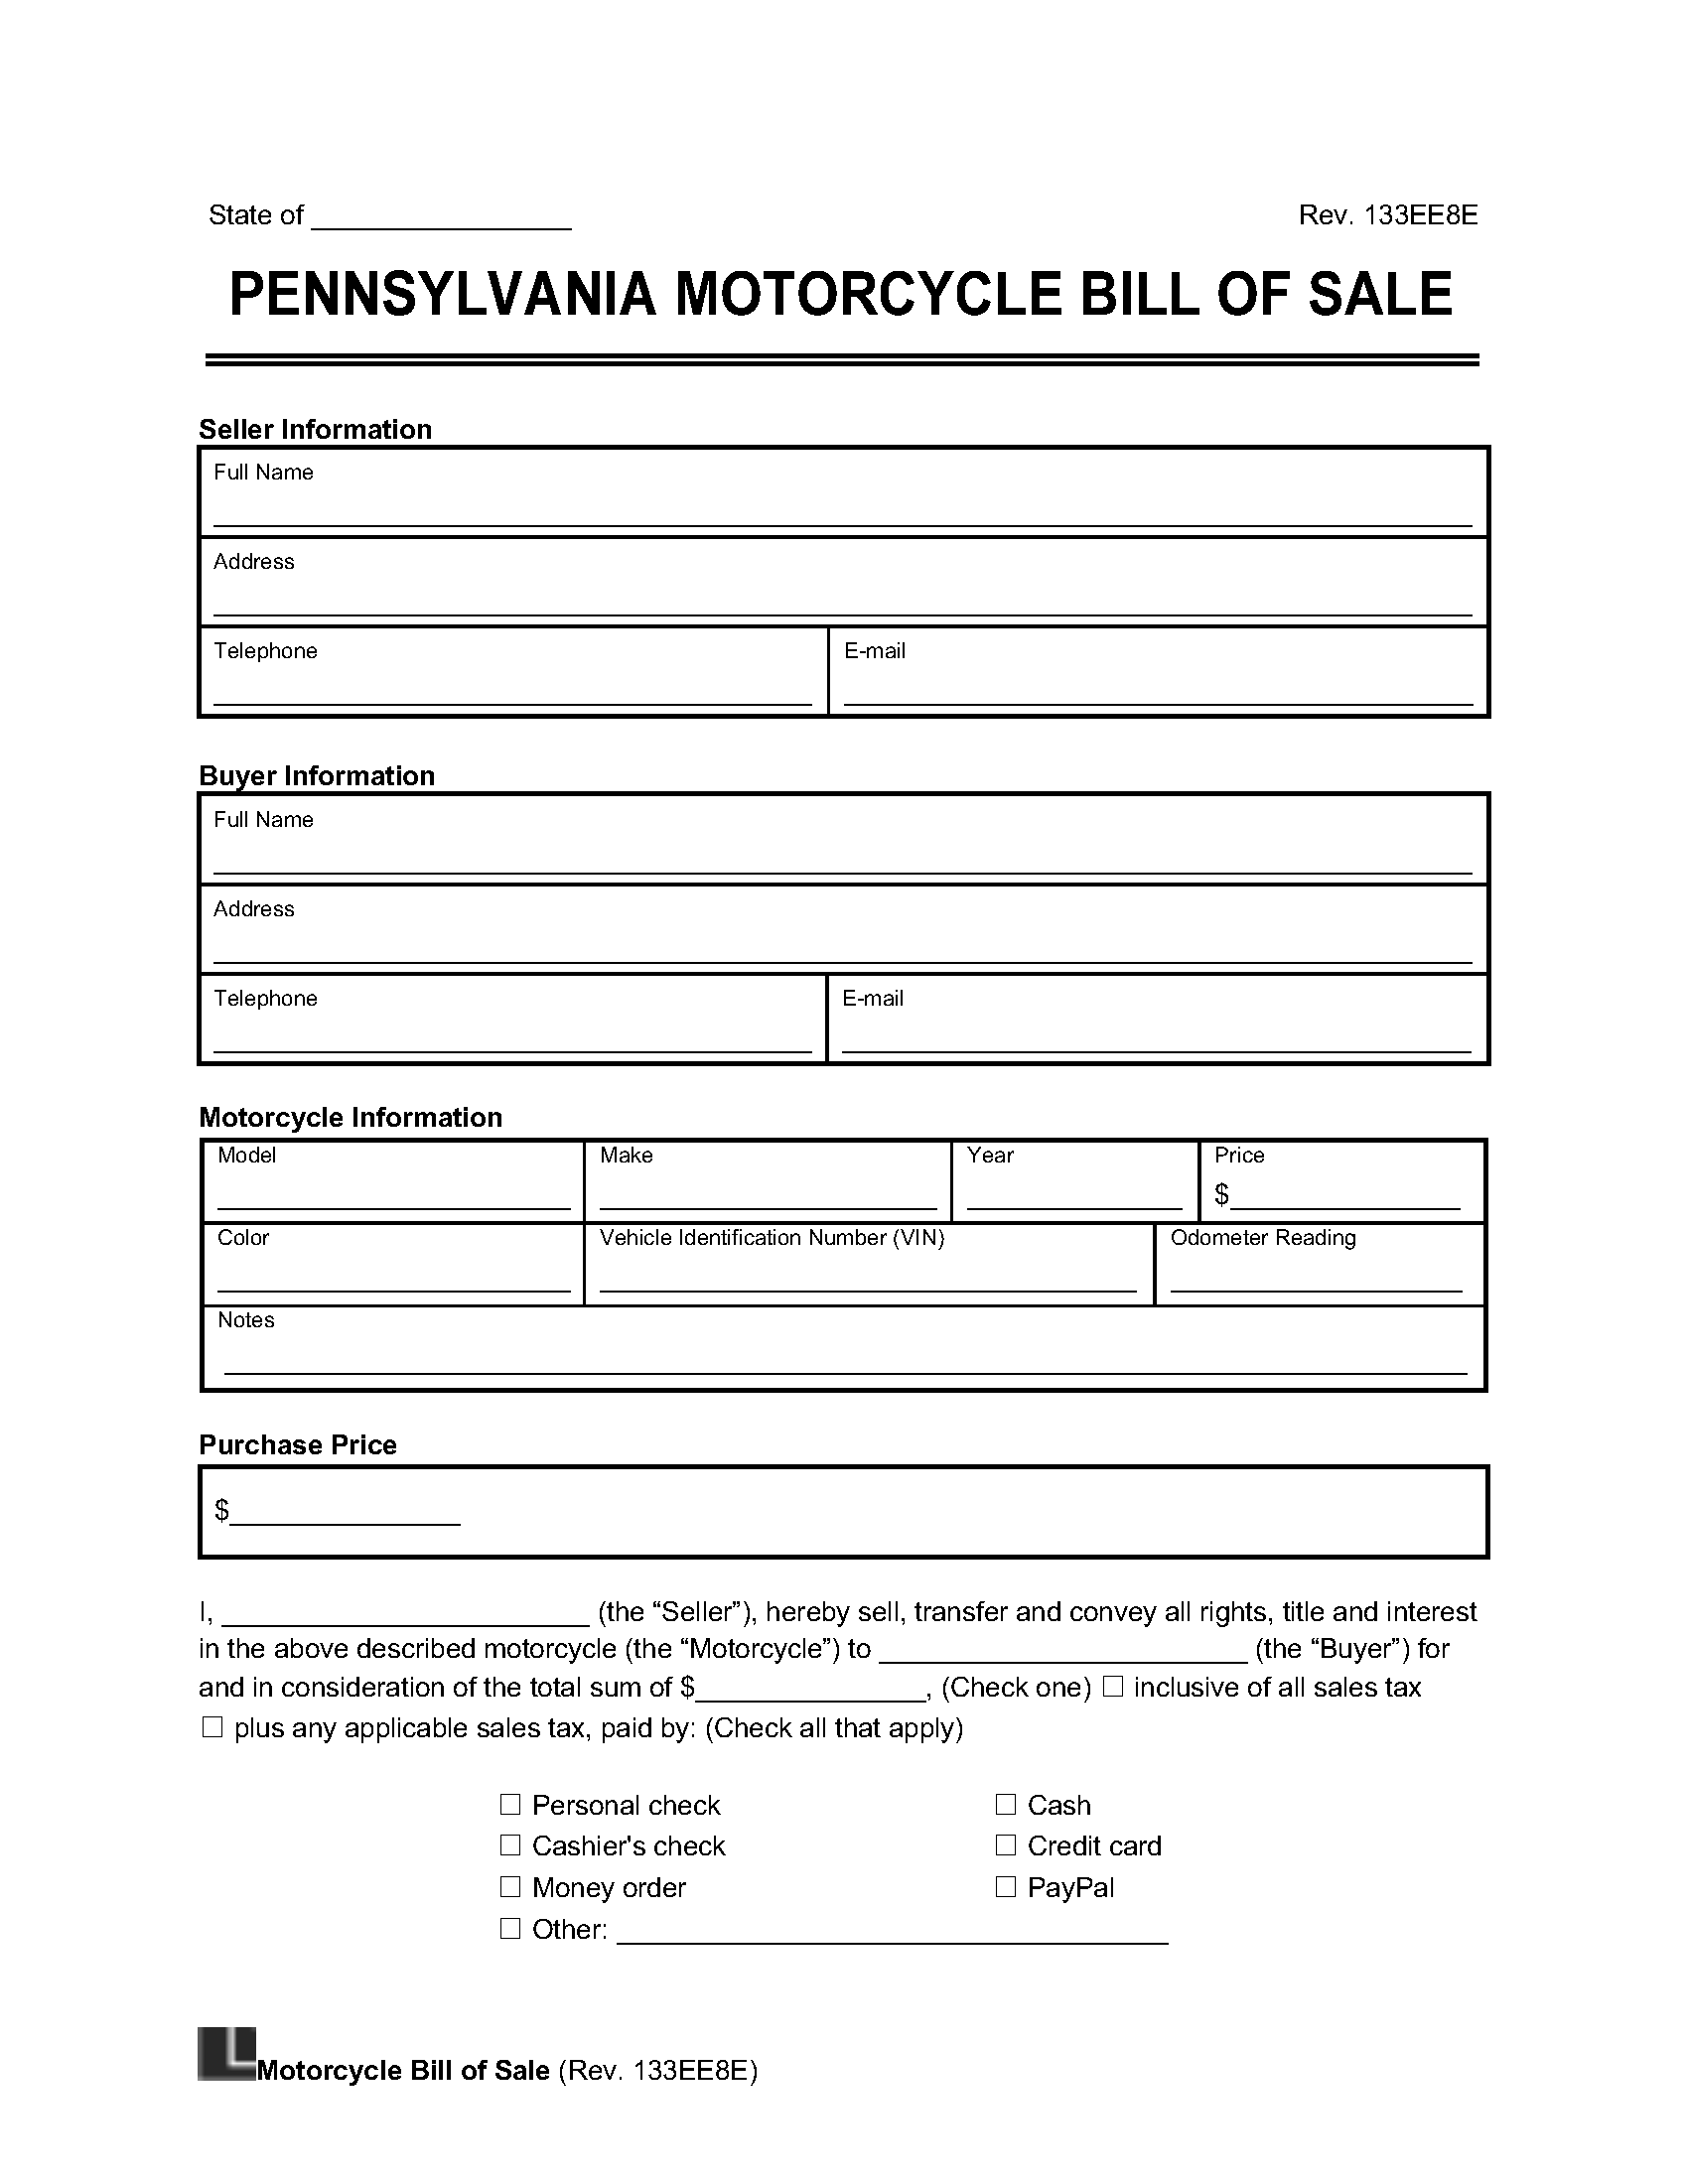 pennsylvania motorcycle bill of sale